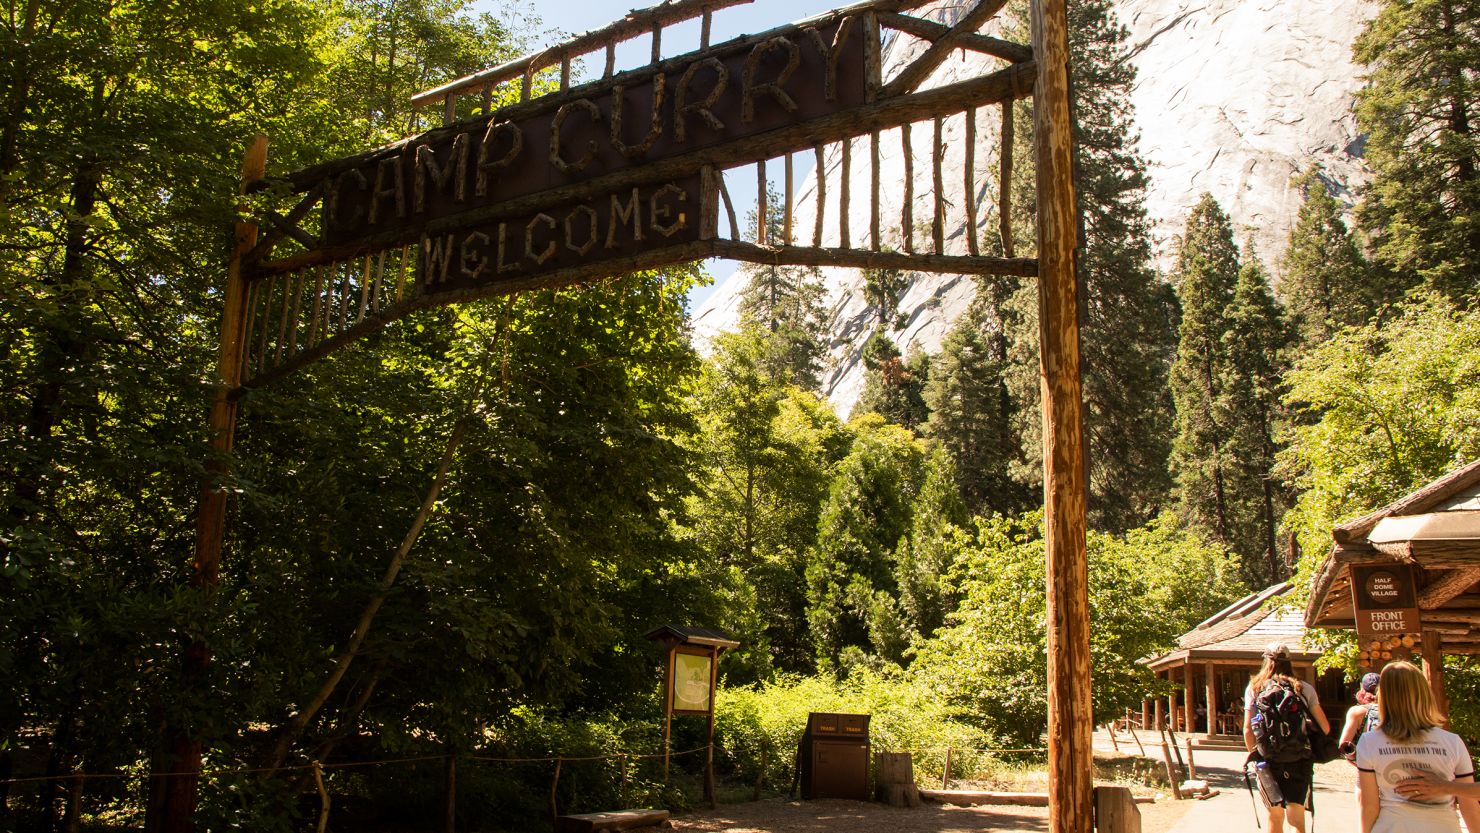 03 Yosemite National Park Signs Restored